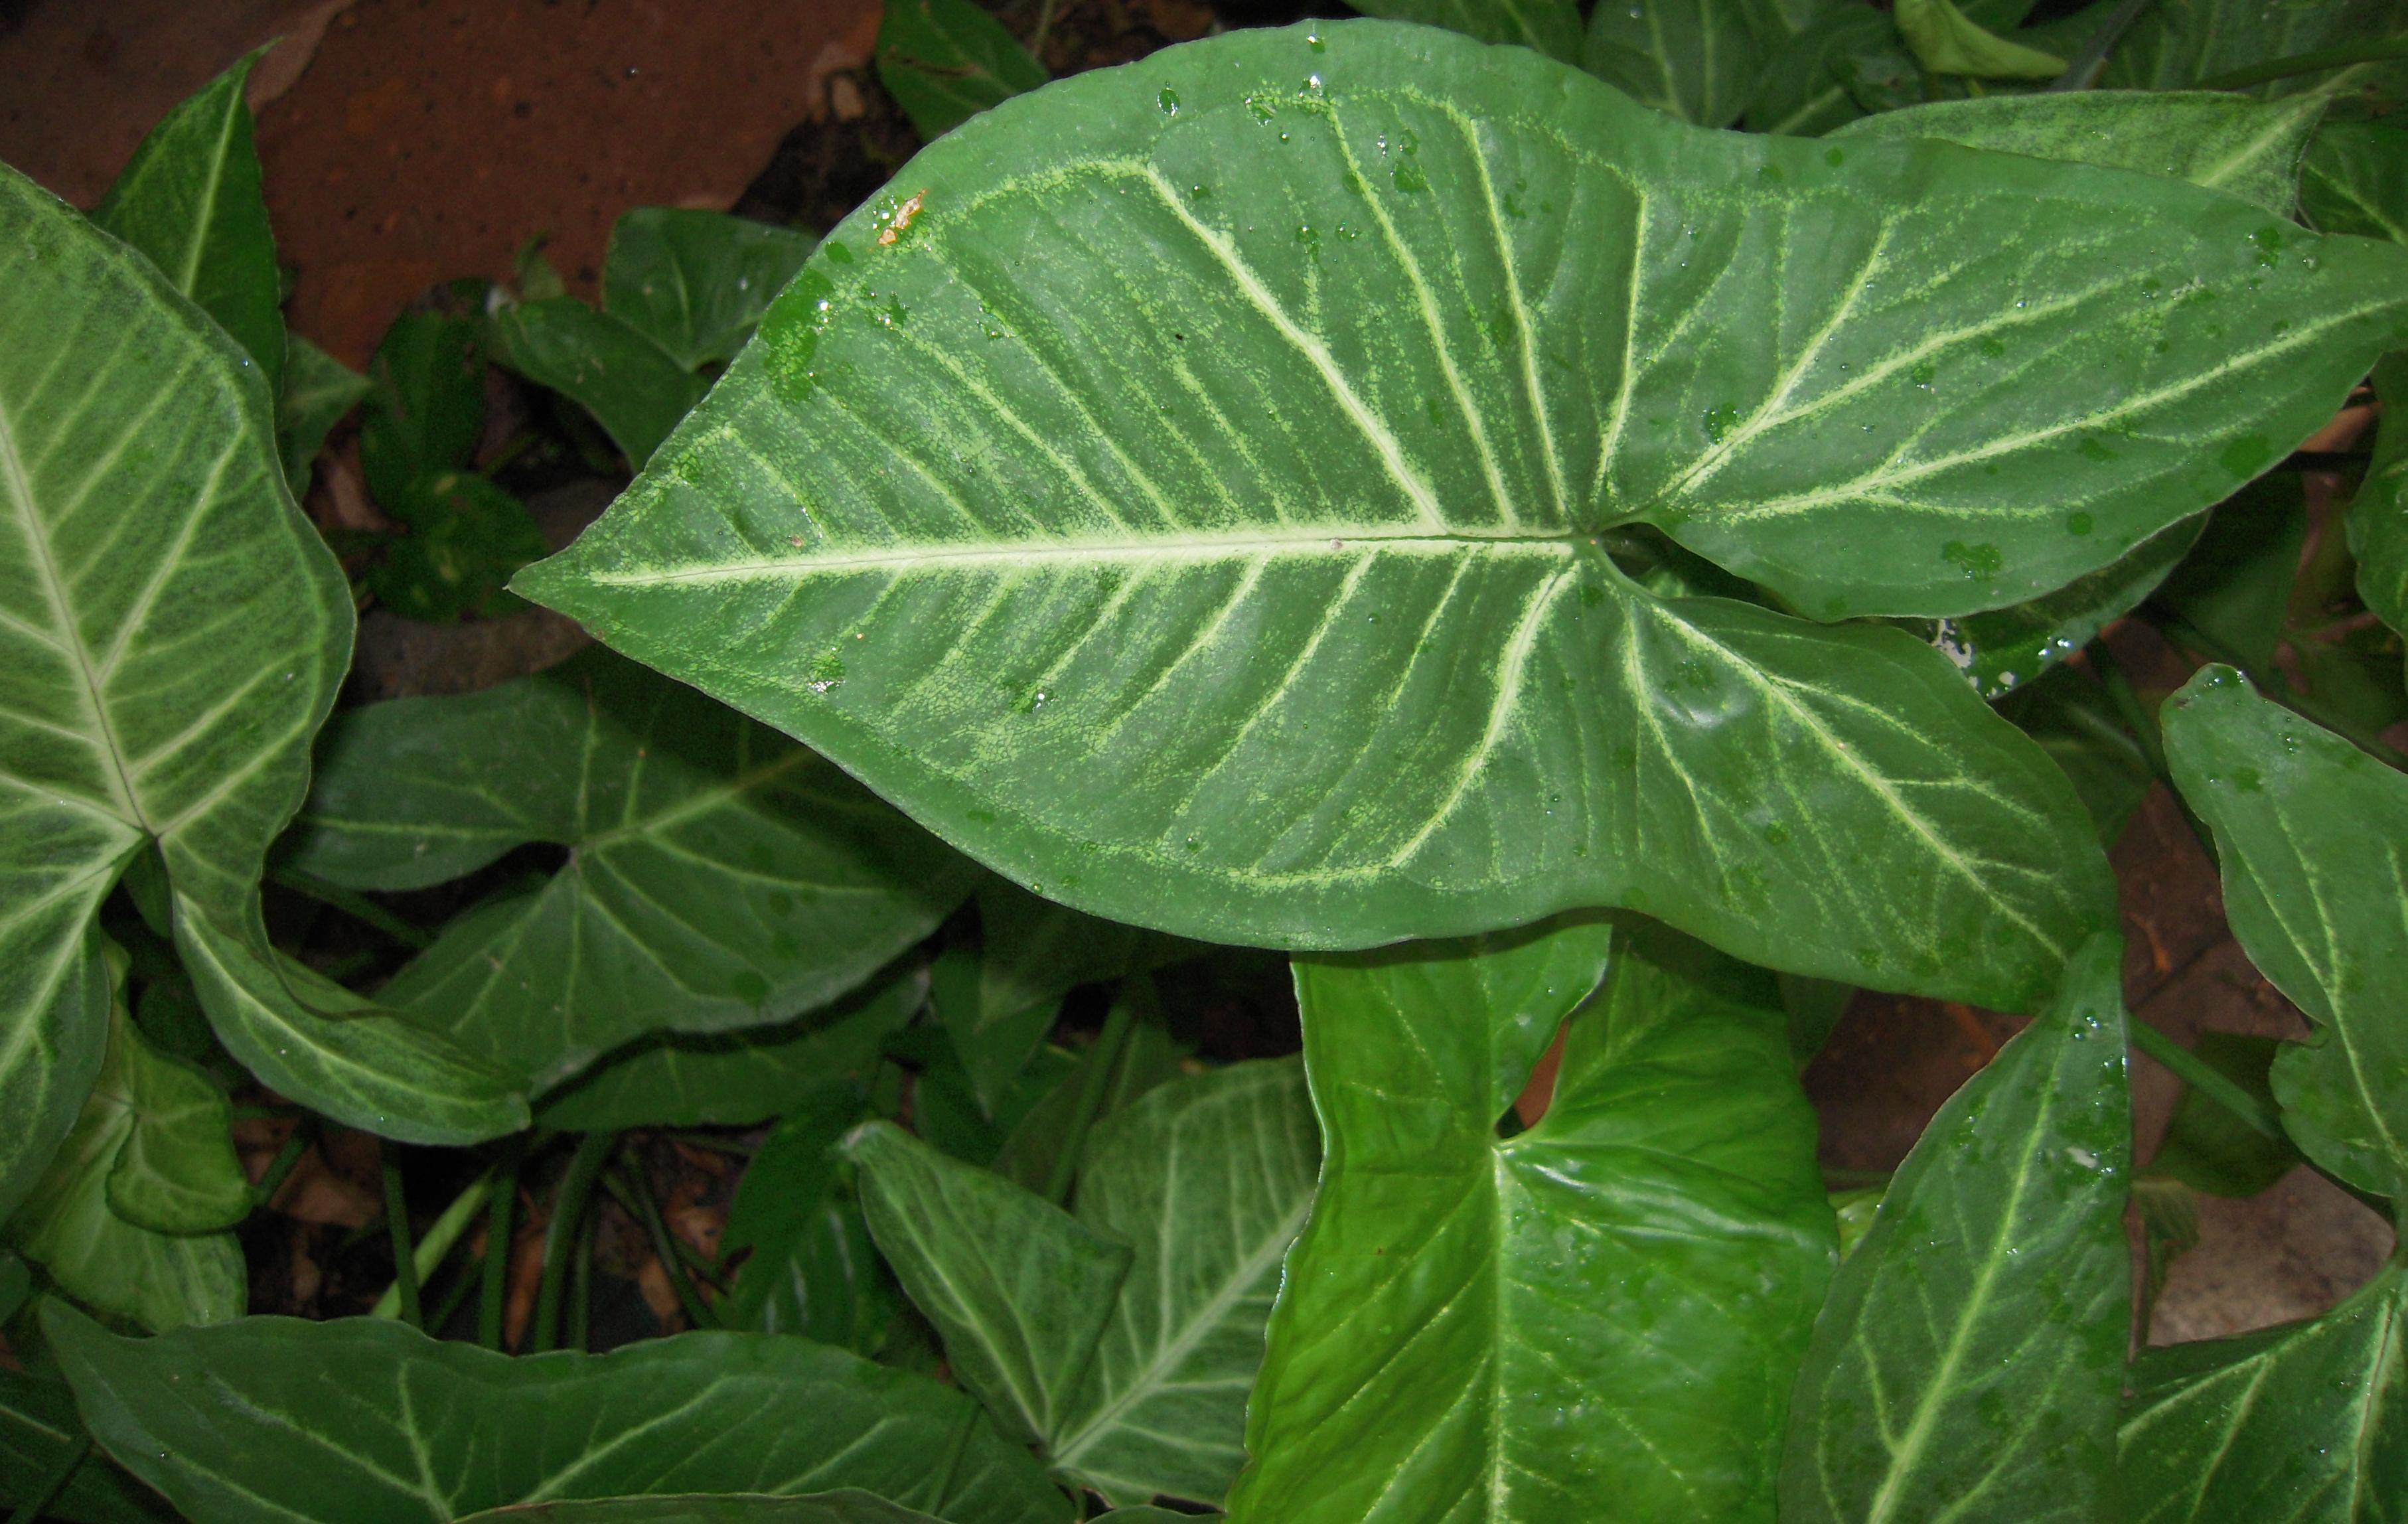 Arrowhead vine leaf (Syngonium spp)